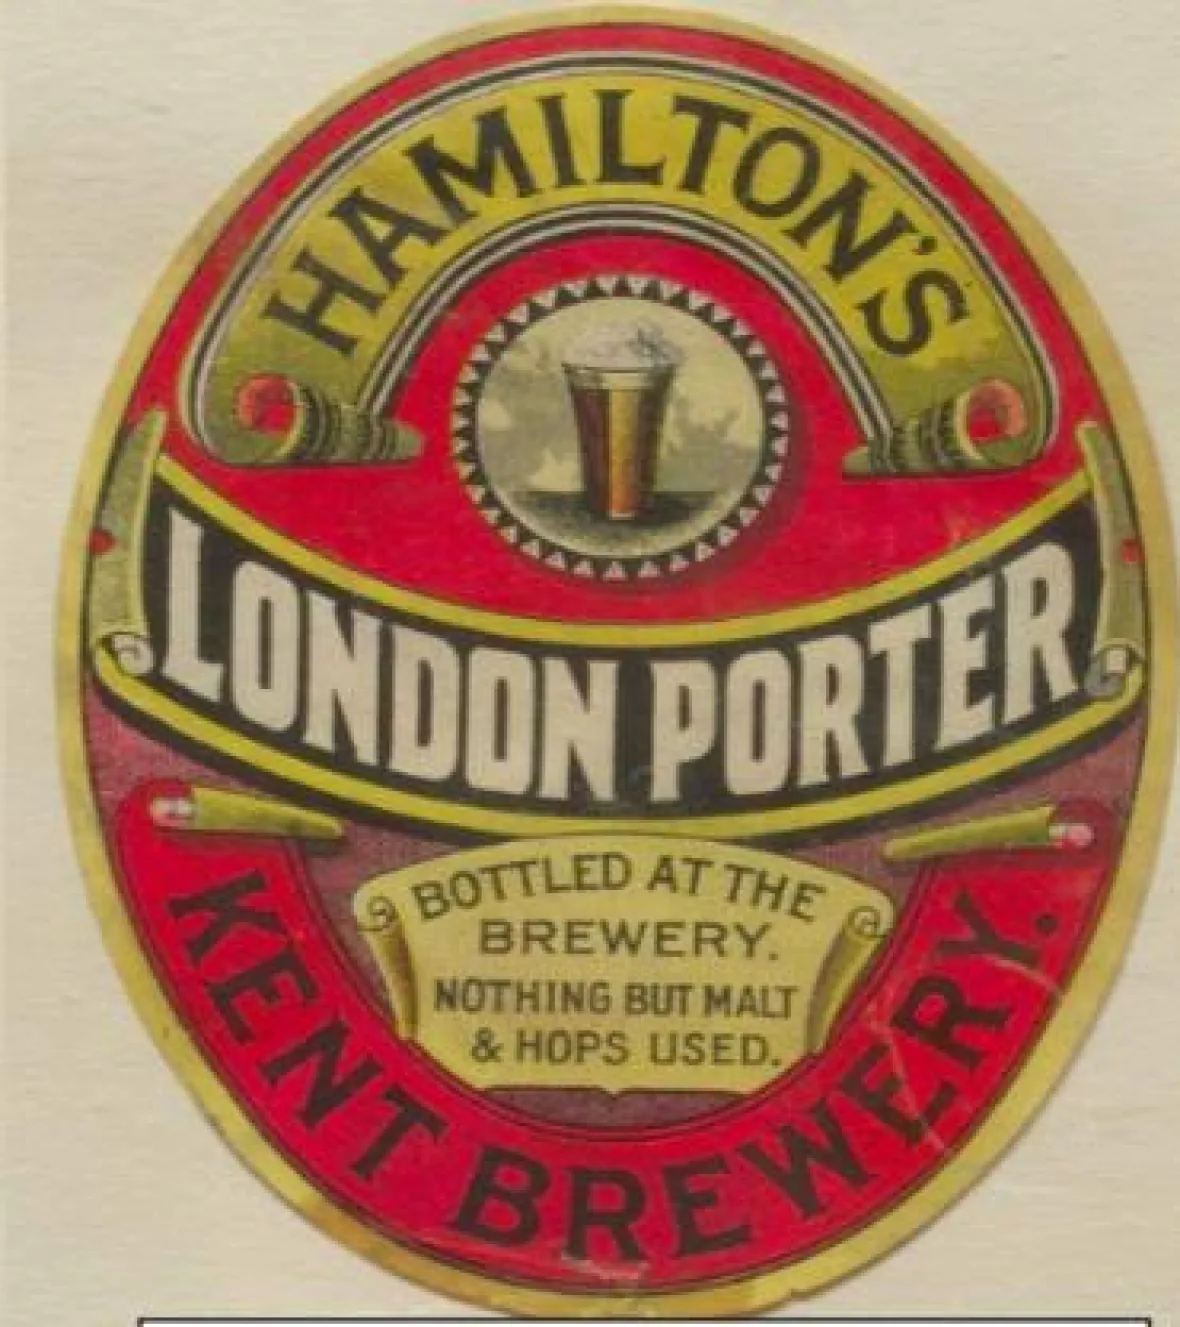 London porter emblem